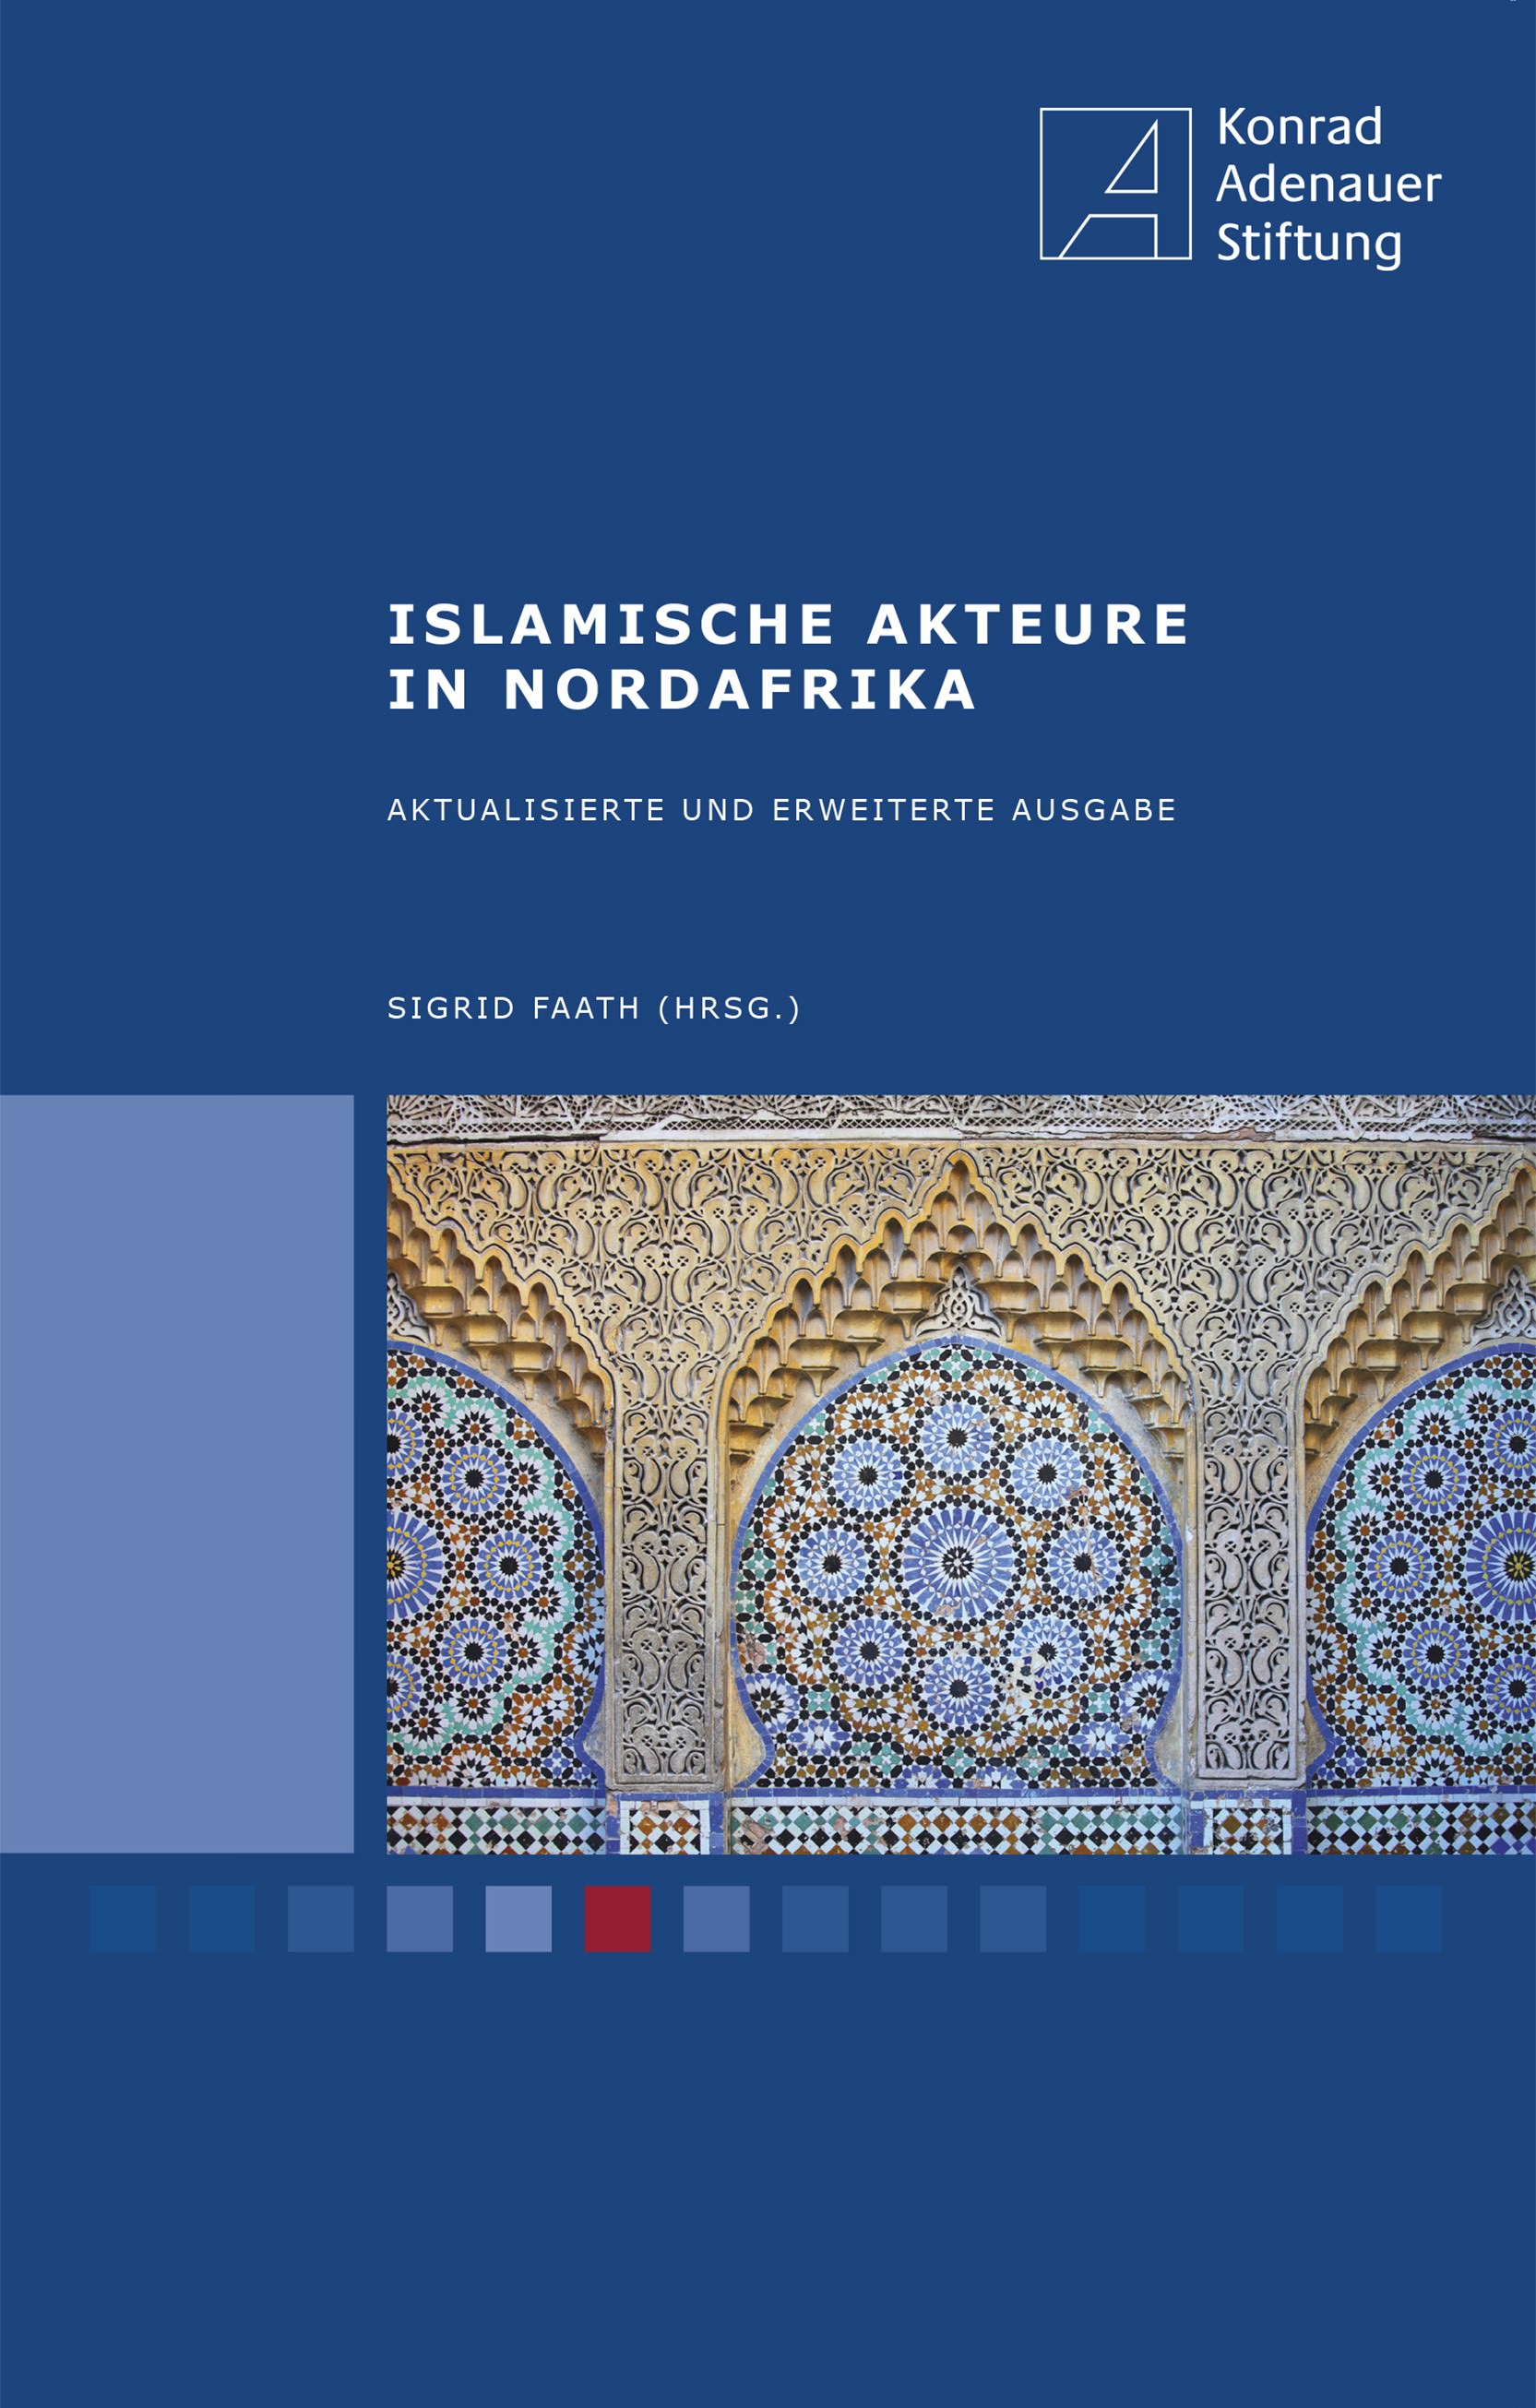 Sigrid Faath (Hrsg.): Islamische Akteure in Nordafrika. Konrad Adenauer Stiftung